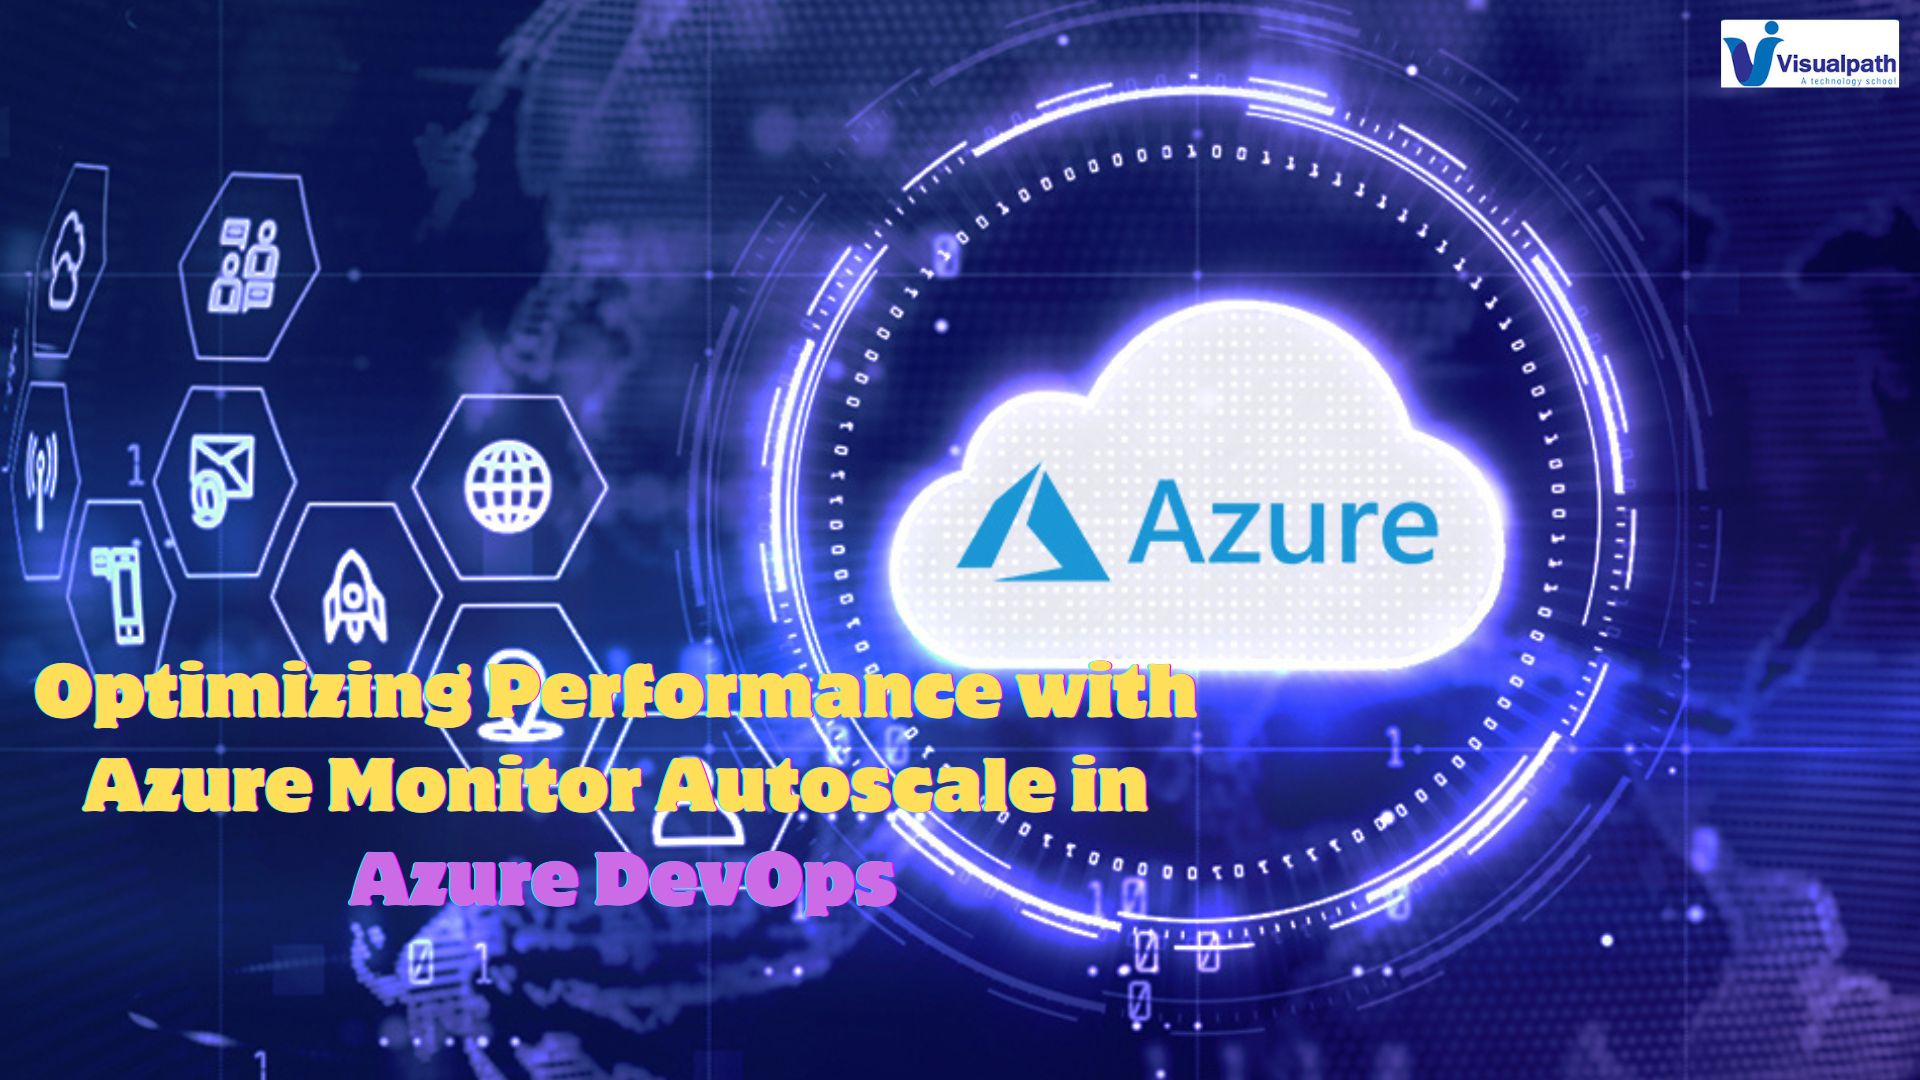 Azure DevOps: Optimizing Performance with Azure Monitor Auto scale